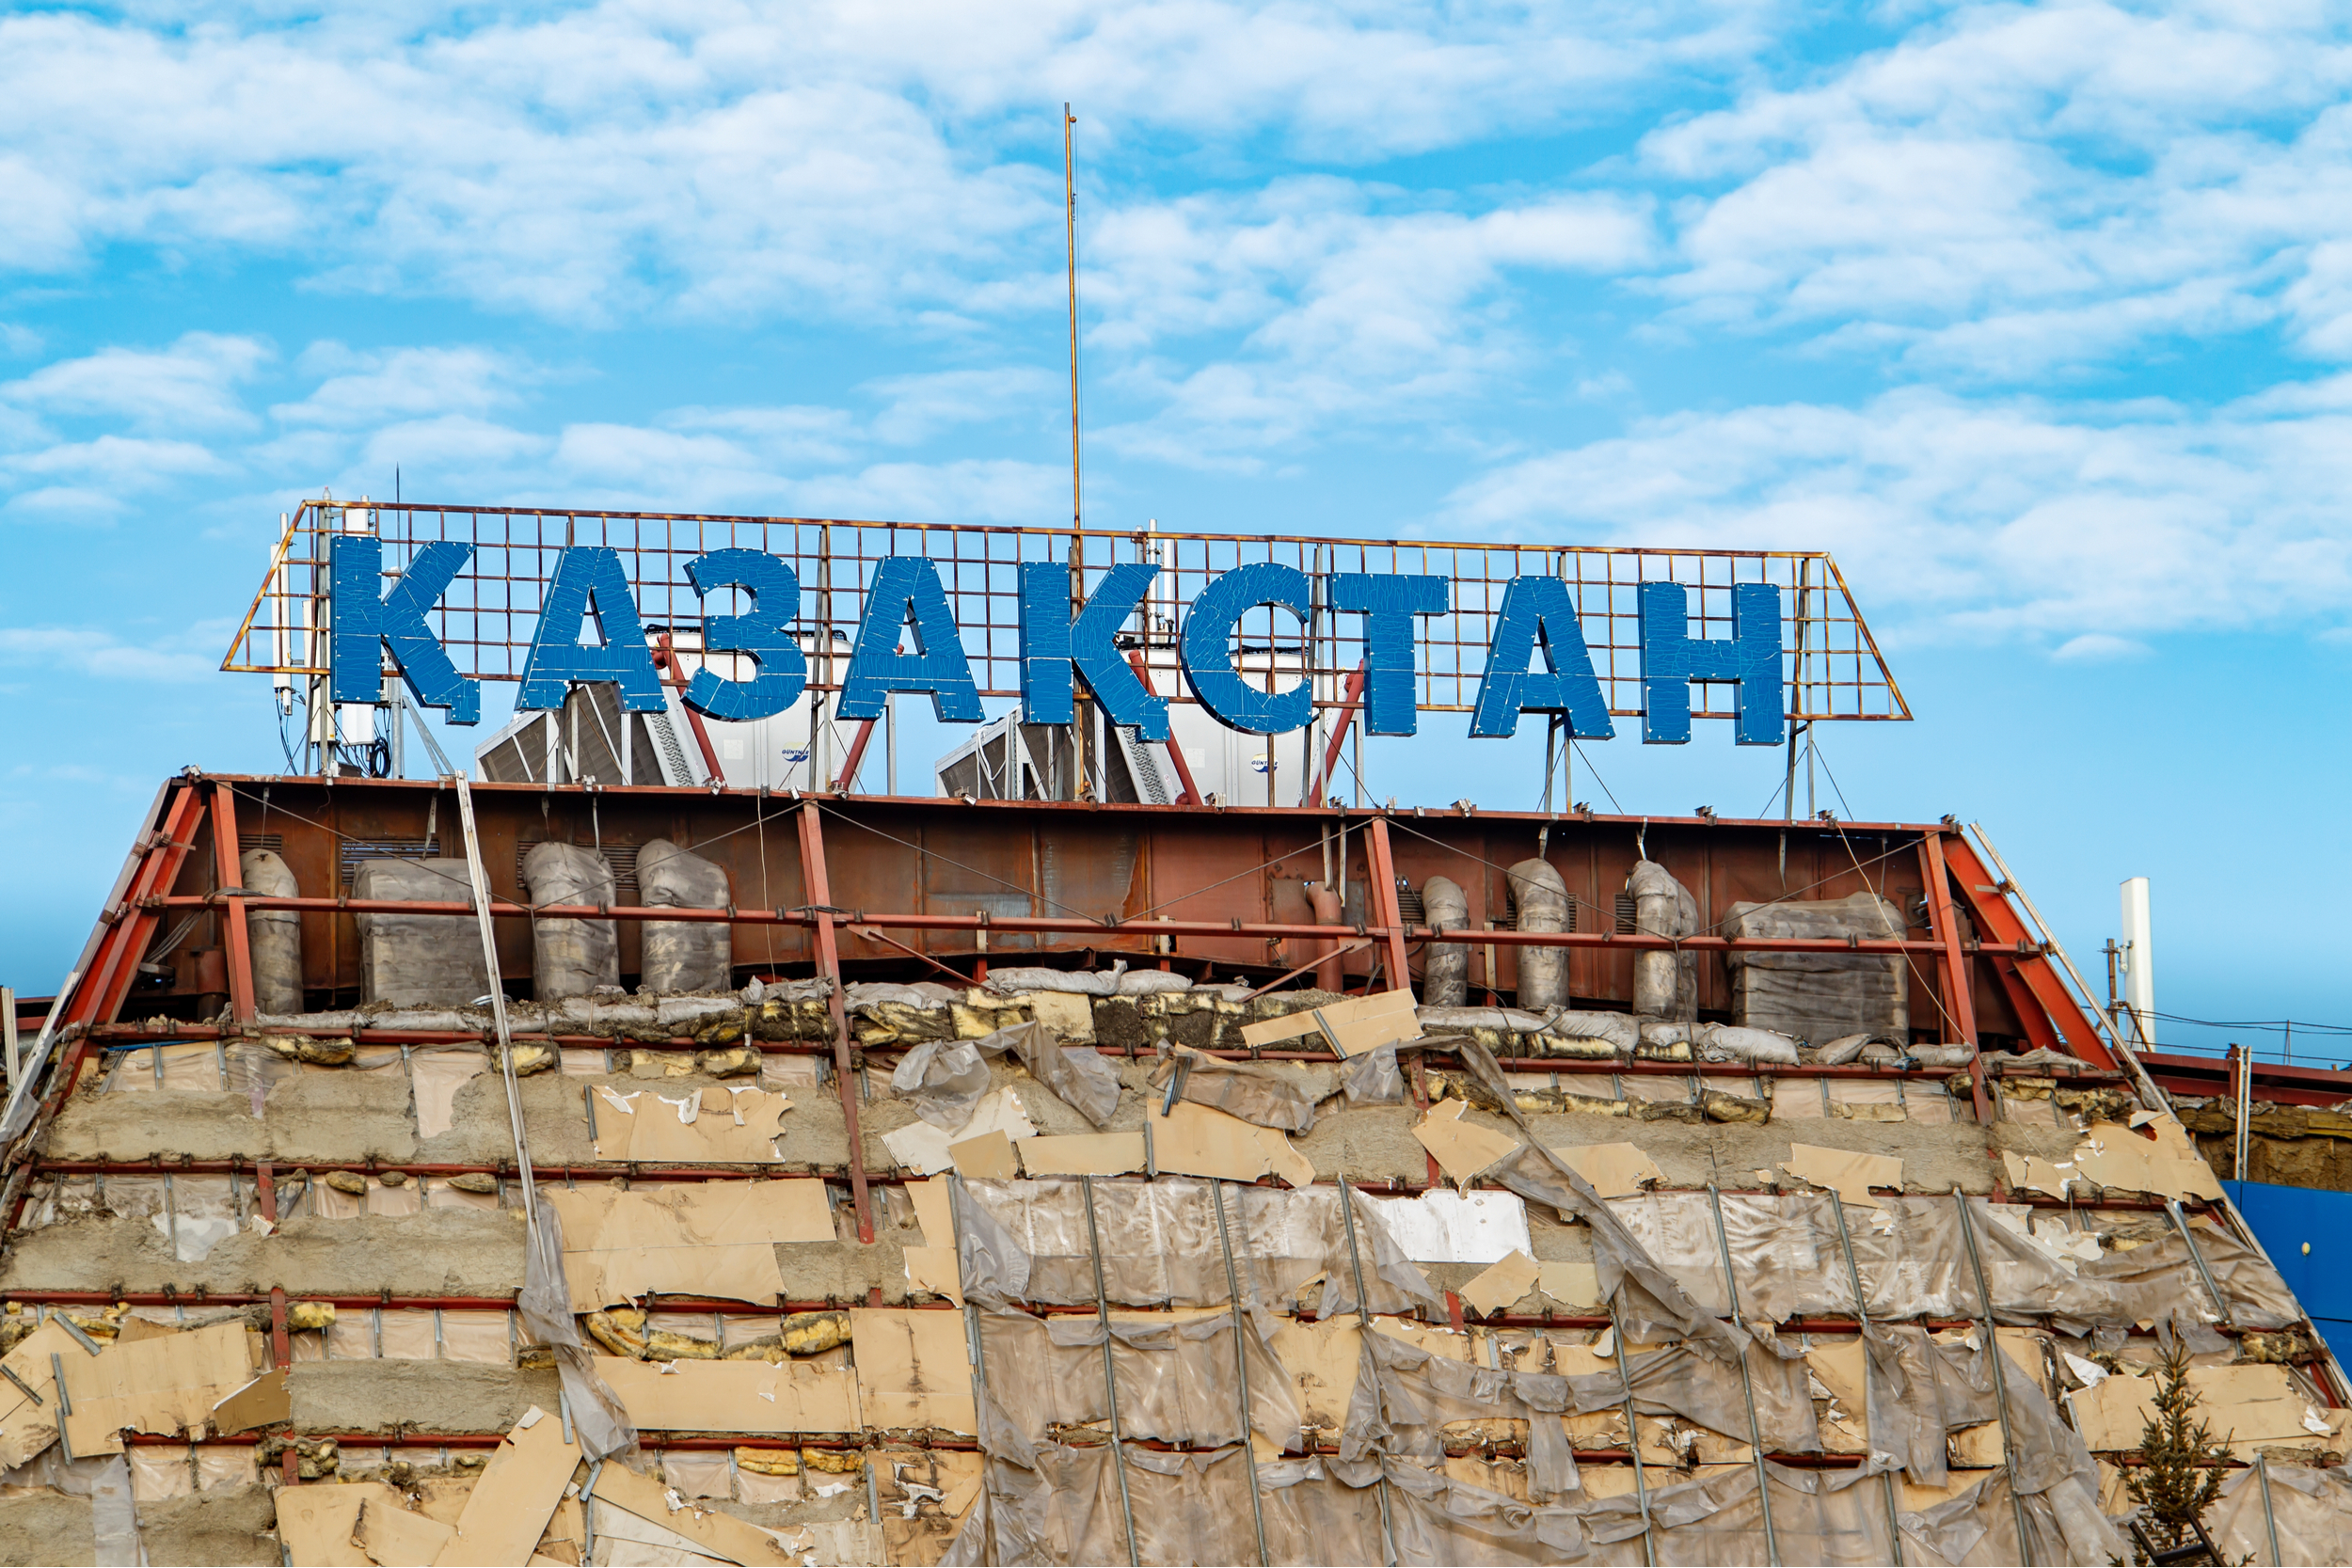 Napis "Kazachstan" na zniszczonym budynku. Fot. Trofimchuk Vladimir / Shutterstock